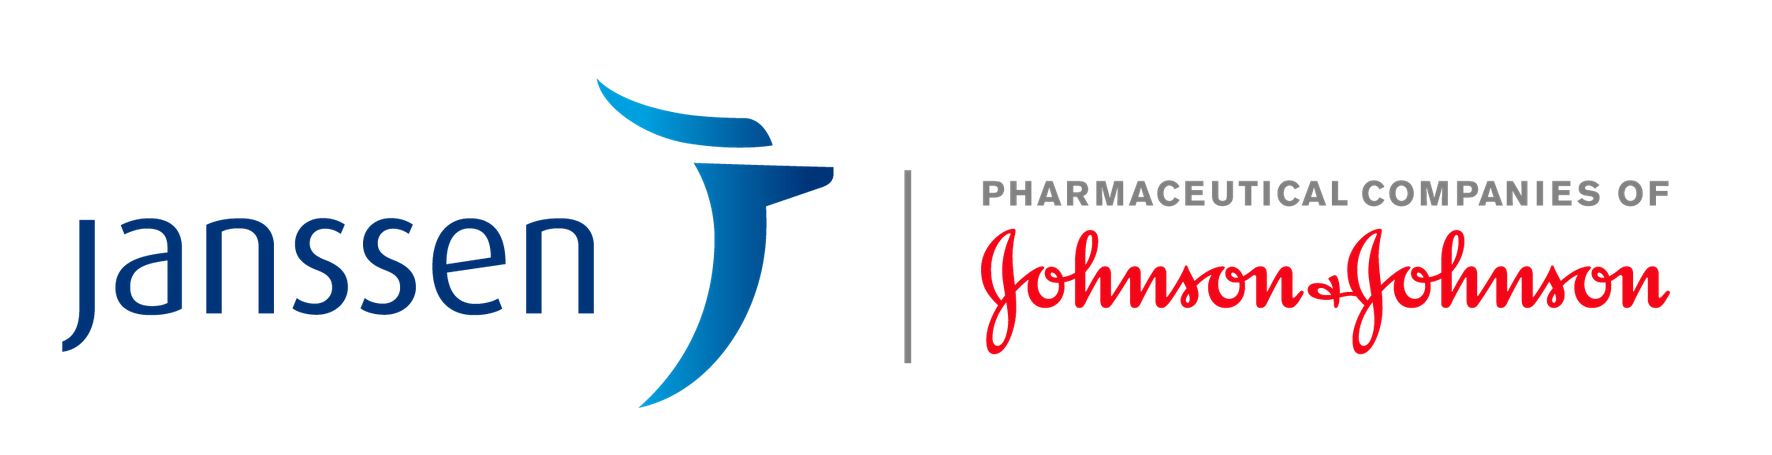 Janssen Companiile Farmaceutice ale Johnson & Johnson in Romania